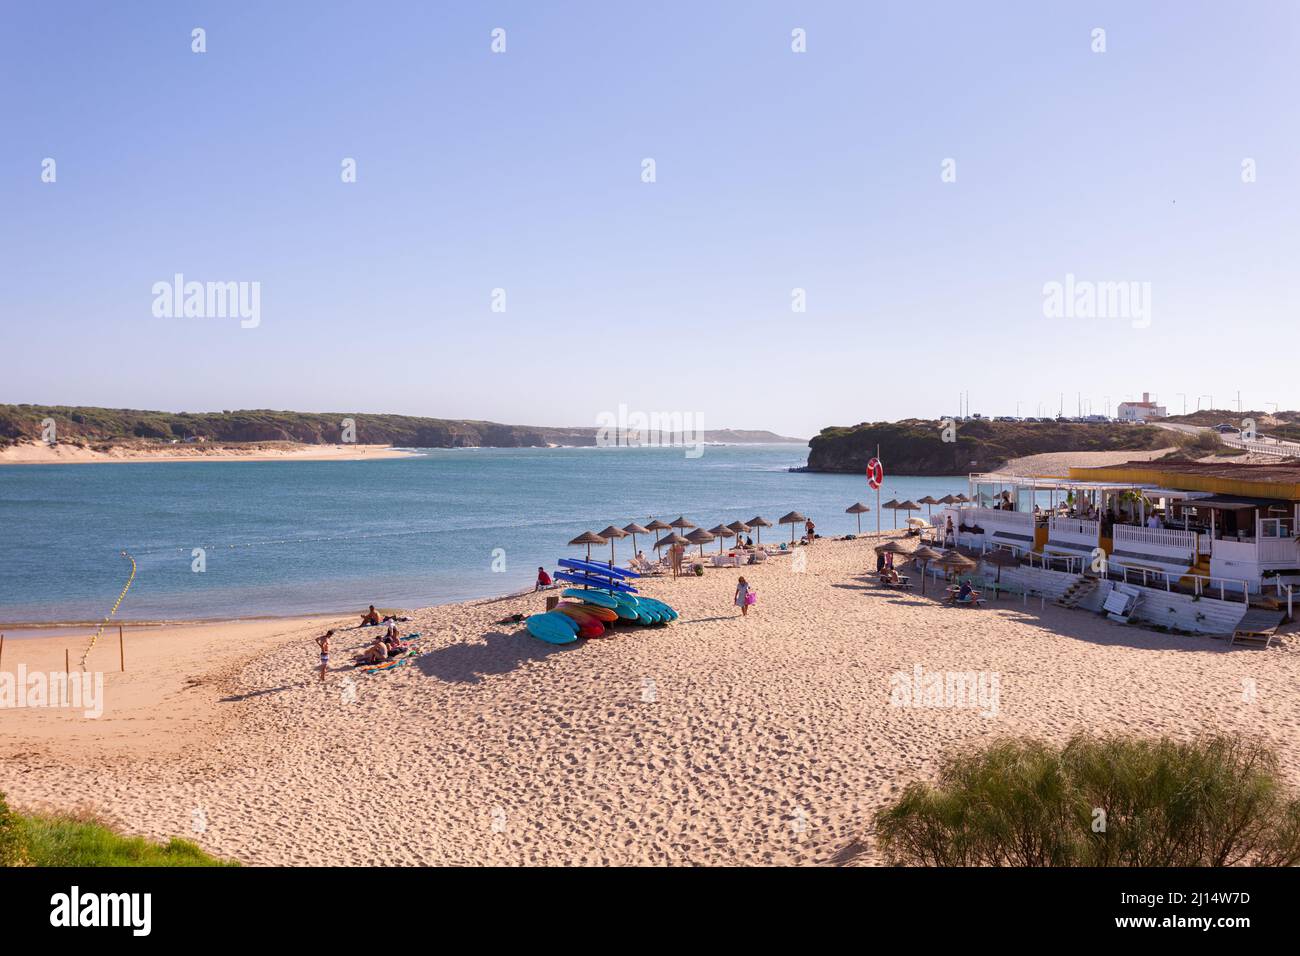 Praia da Franquia beach, on the banks of the Mira River, in the coastal town of Vila Nova de Milfontes, Vicentine Coast, Alentejo - Portugal. Stock Photo